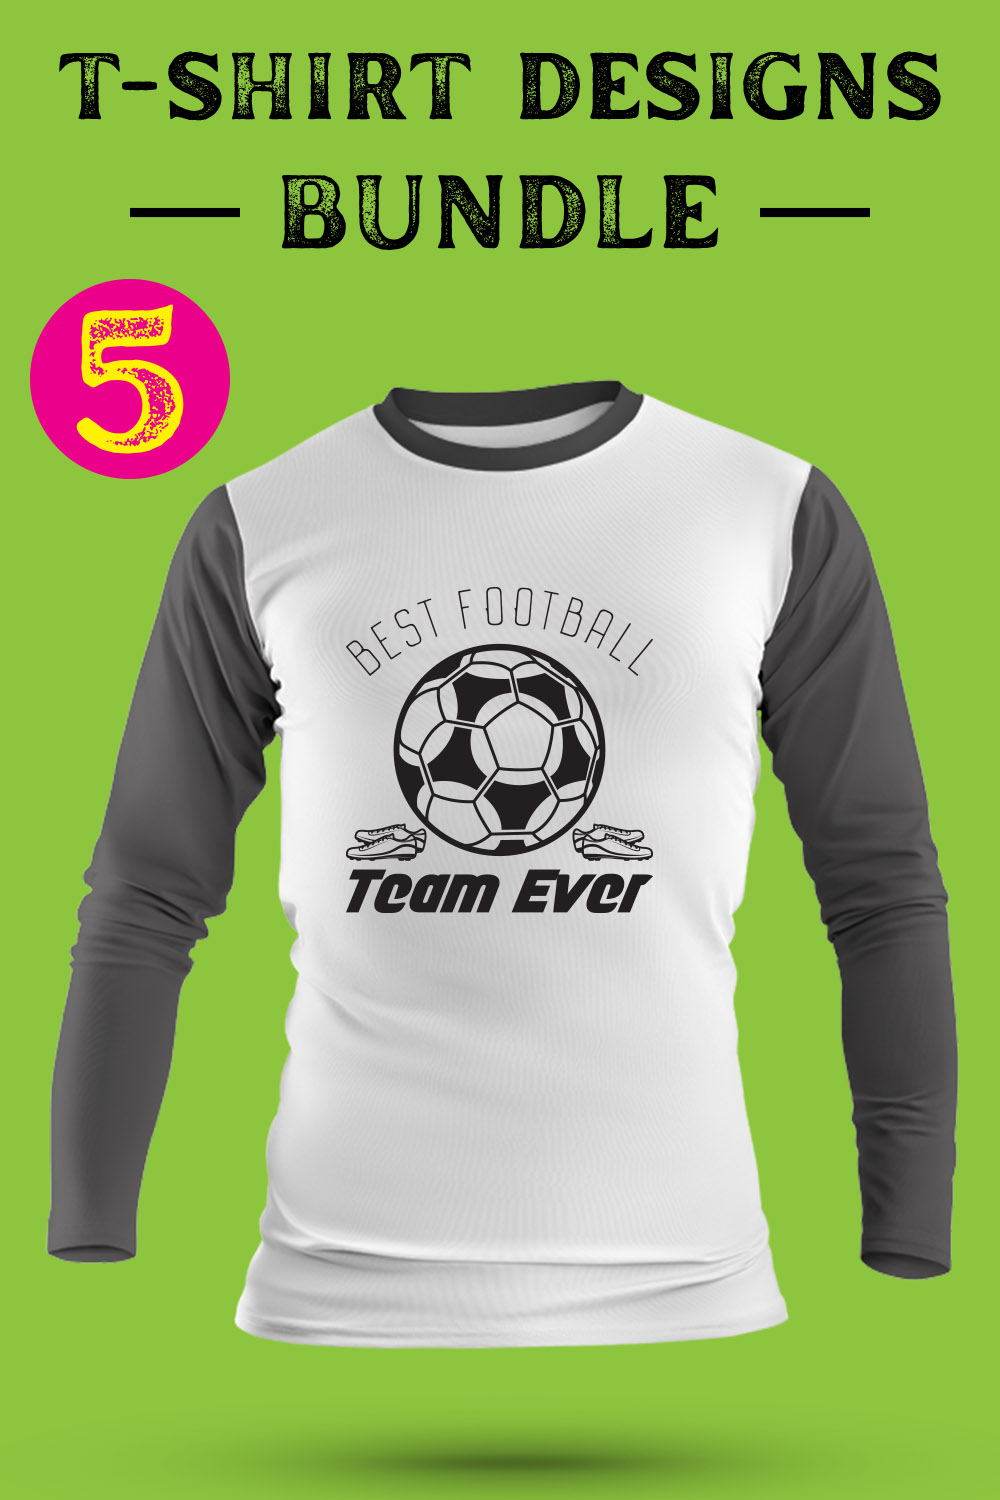 American Football Day T Shirt Designs Bundle voli-14 pinterest preview image.